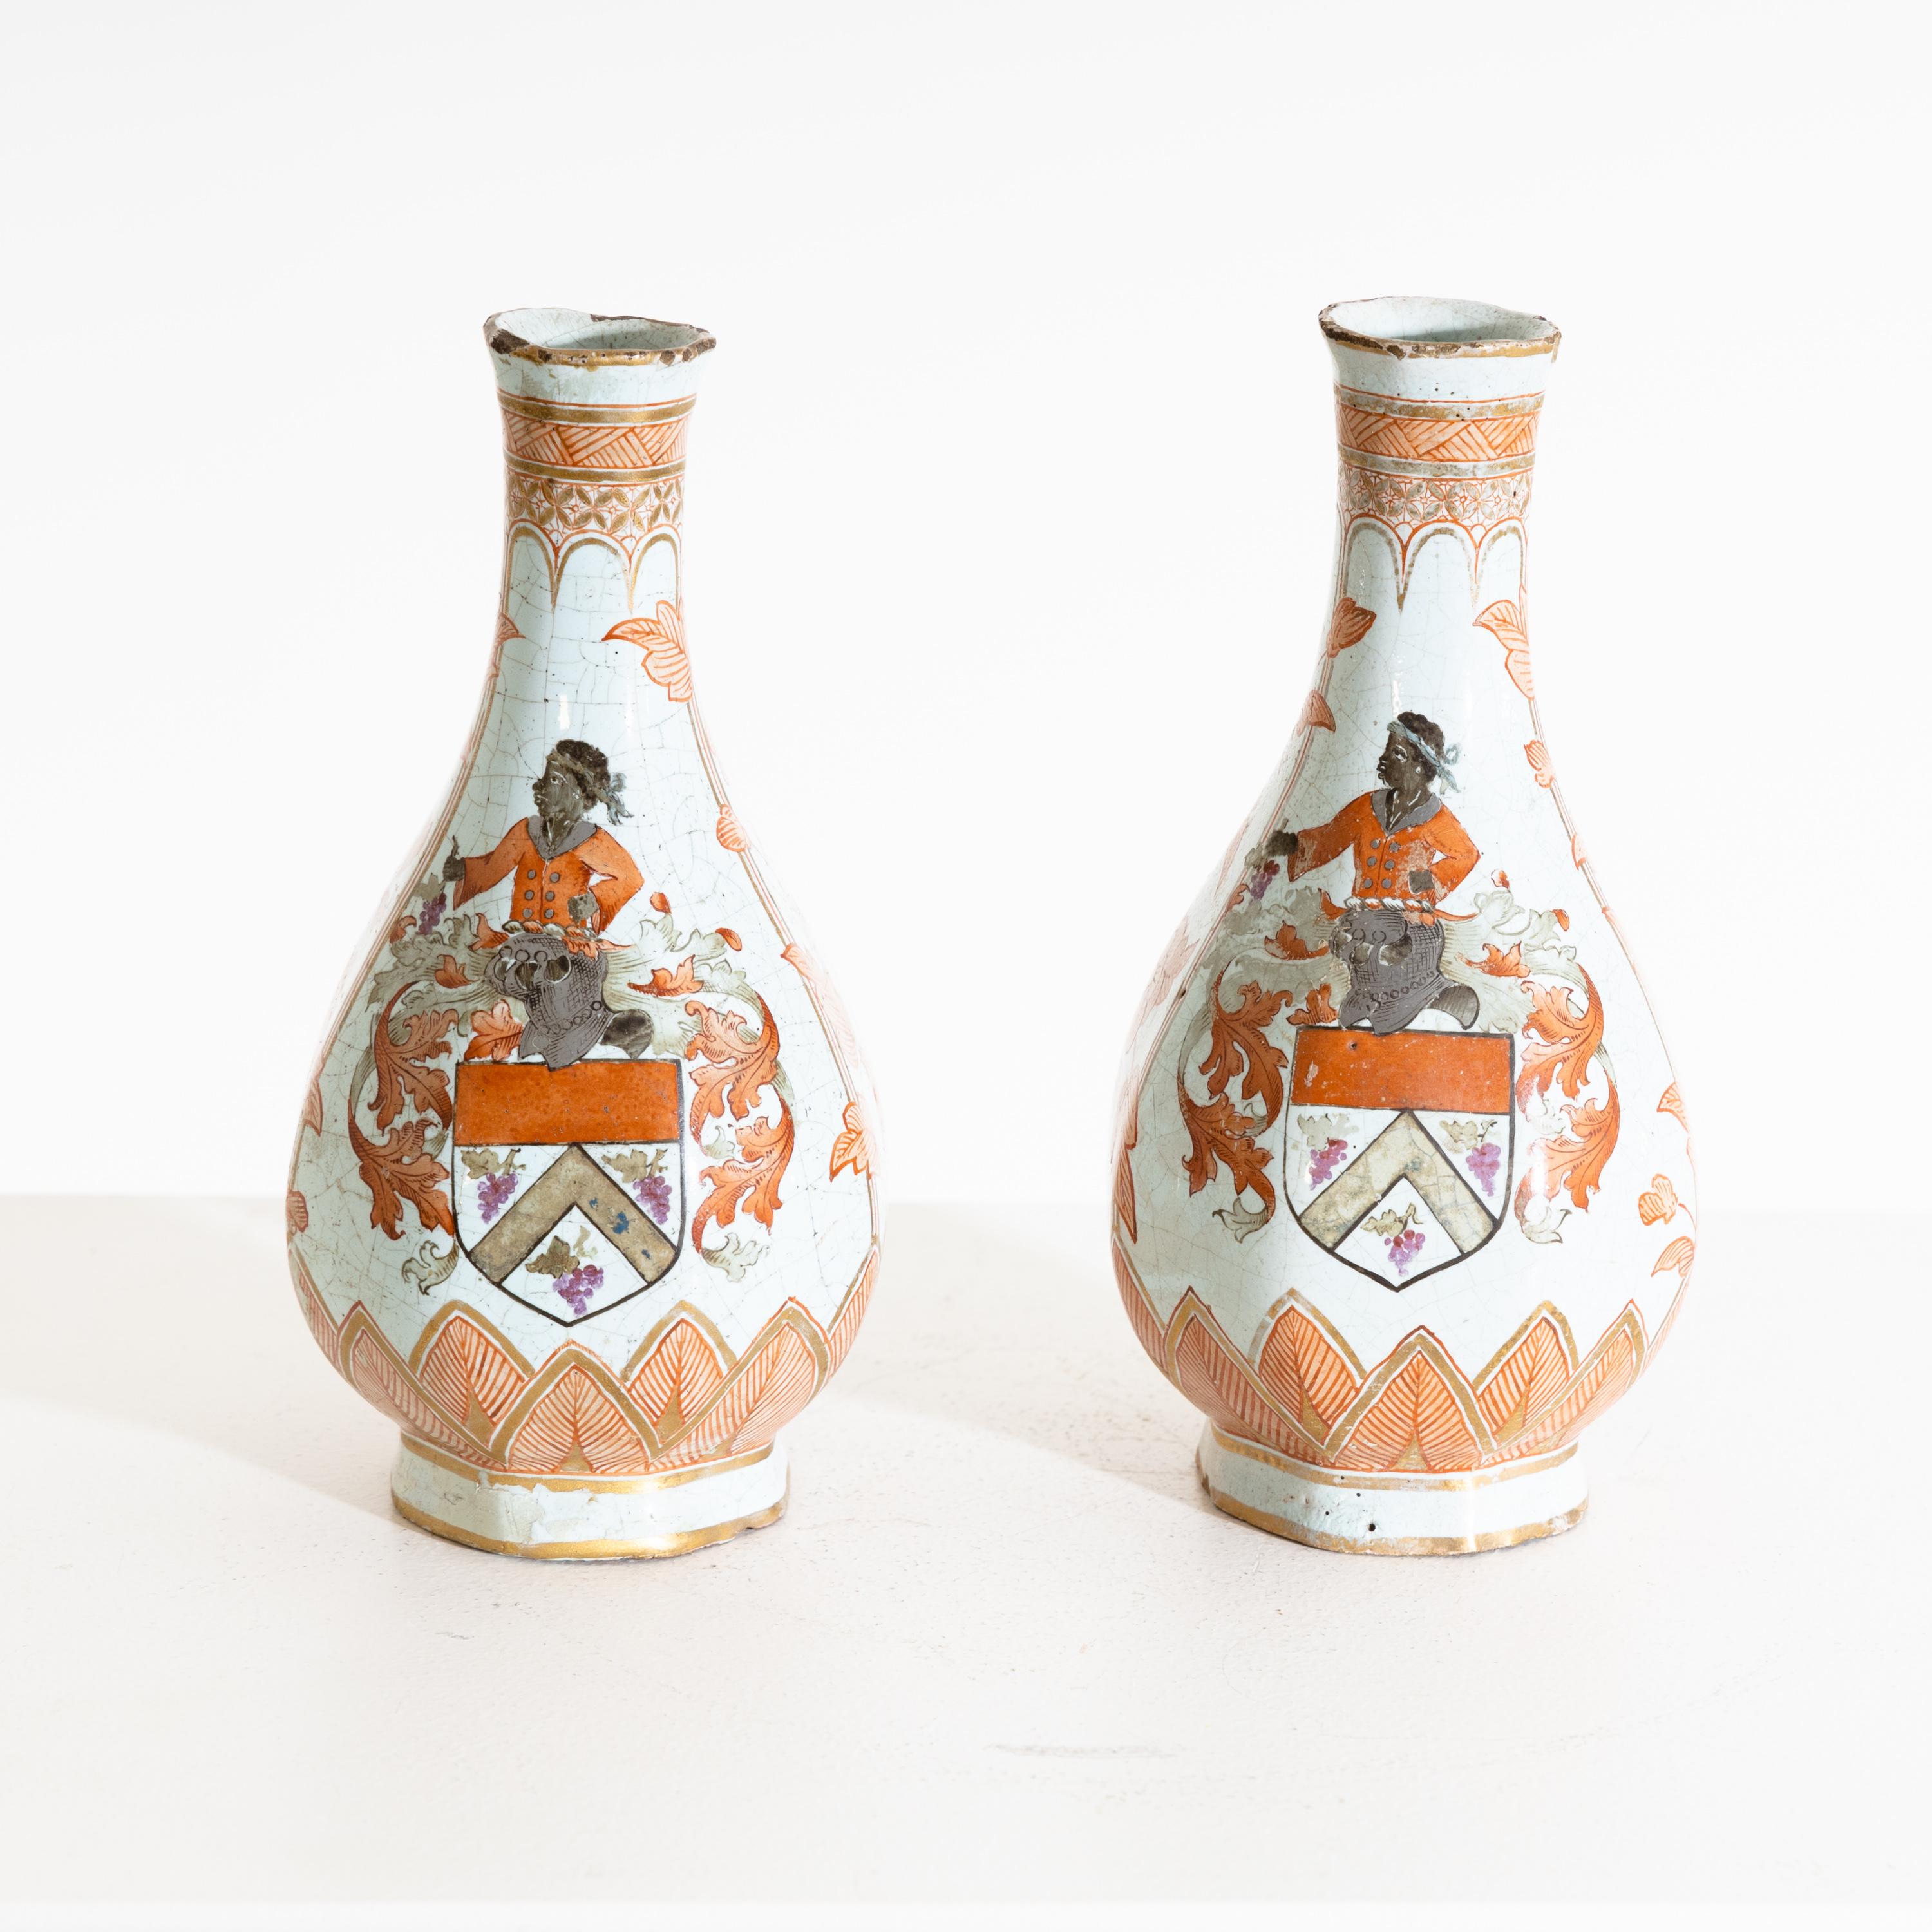 Dutch Pair of Ceramic Vases, Probably Holland, 18th-19th Century